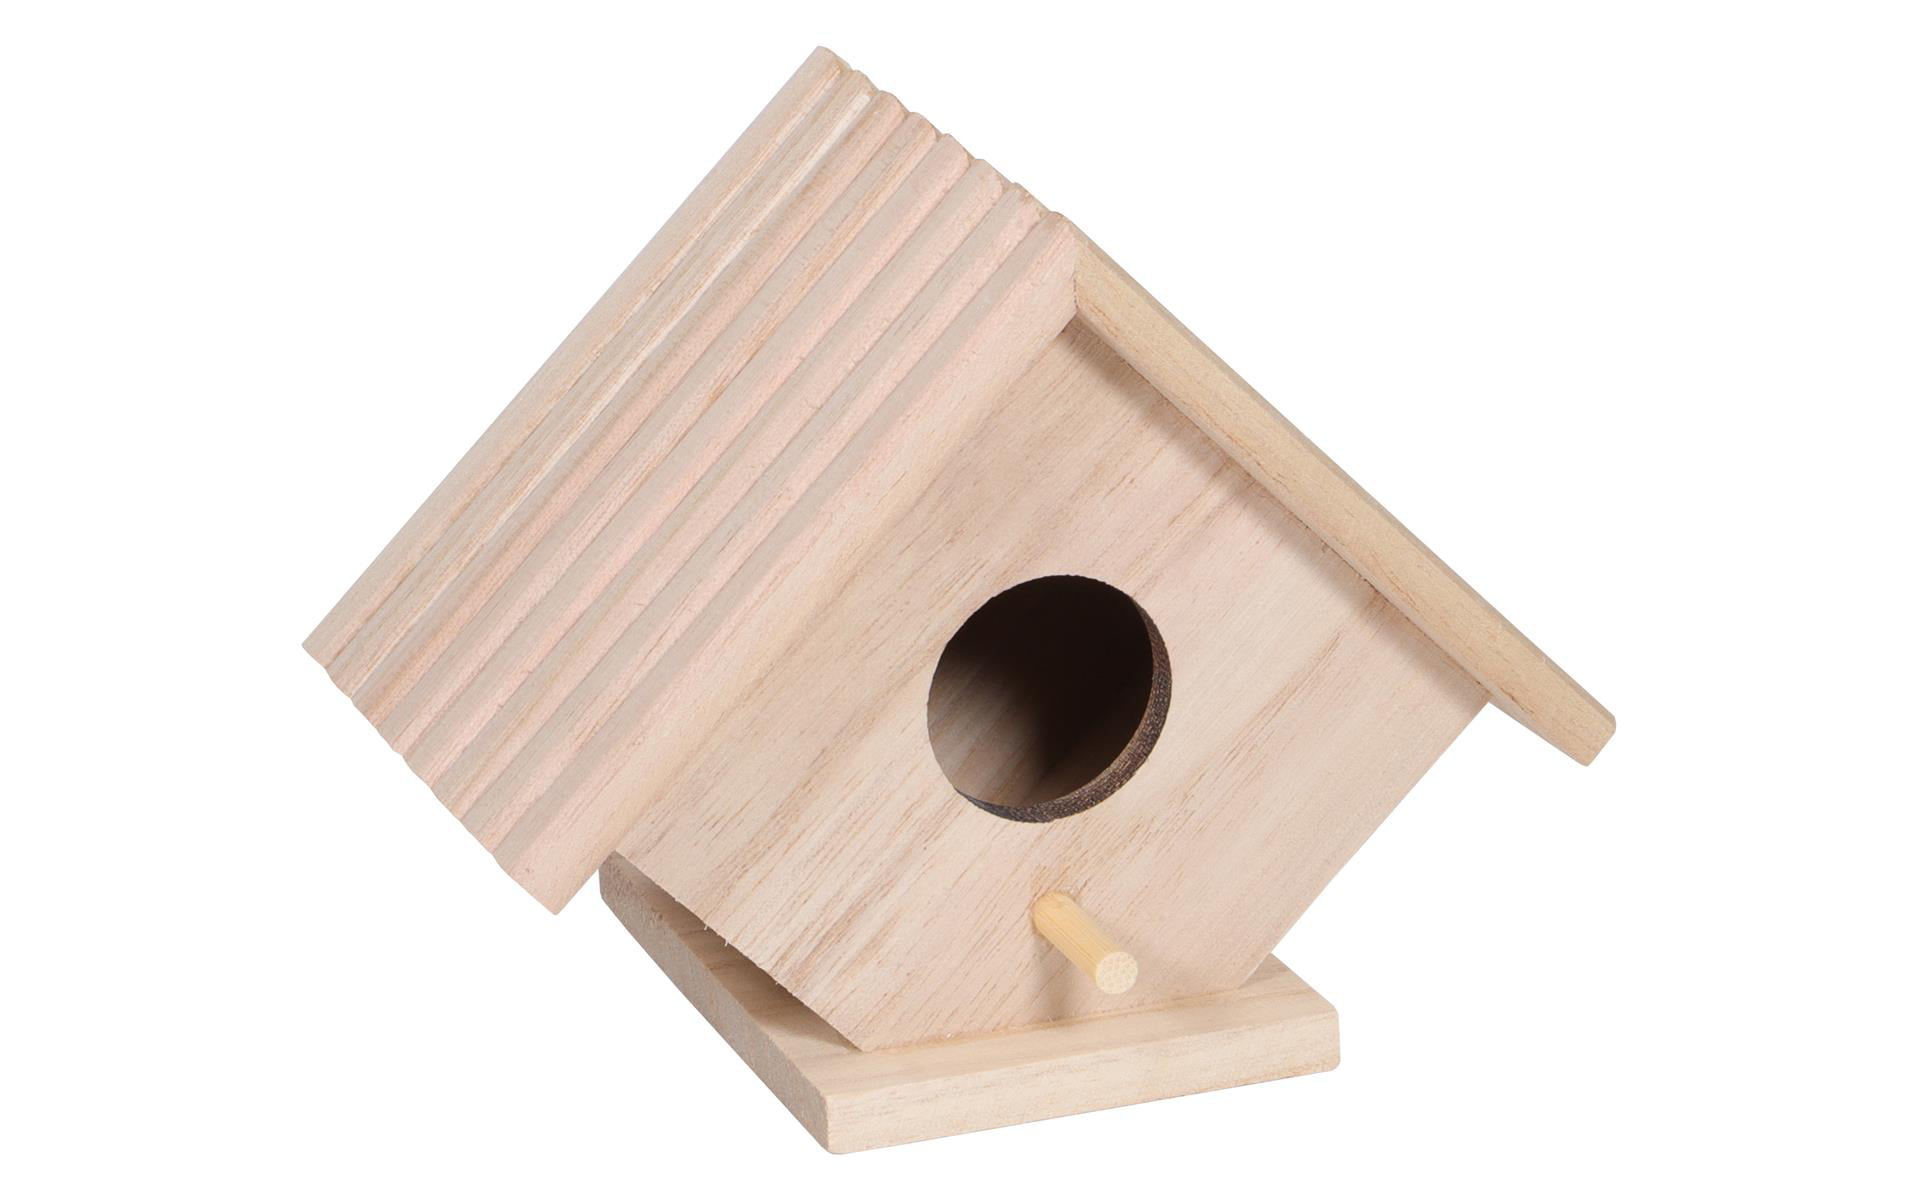 Nest Dox Nest House Bird House Bird House Bird Box Bird Box Wooden Box US Stock 